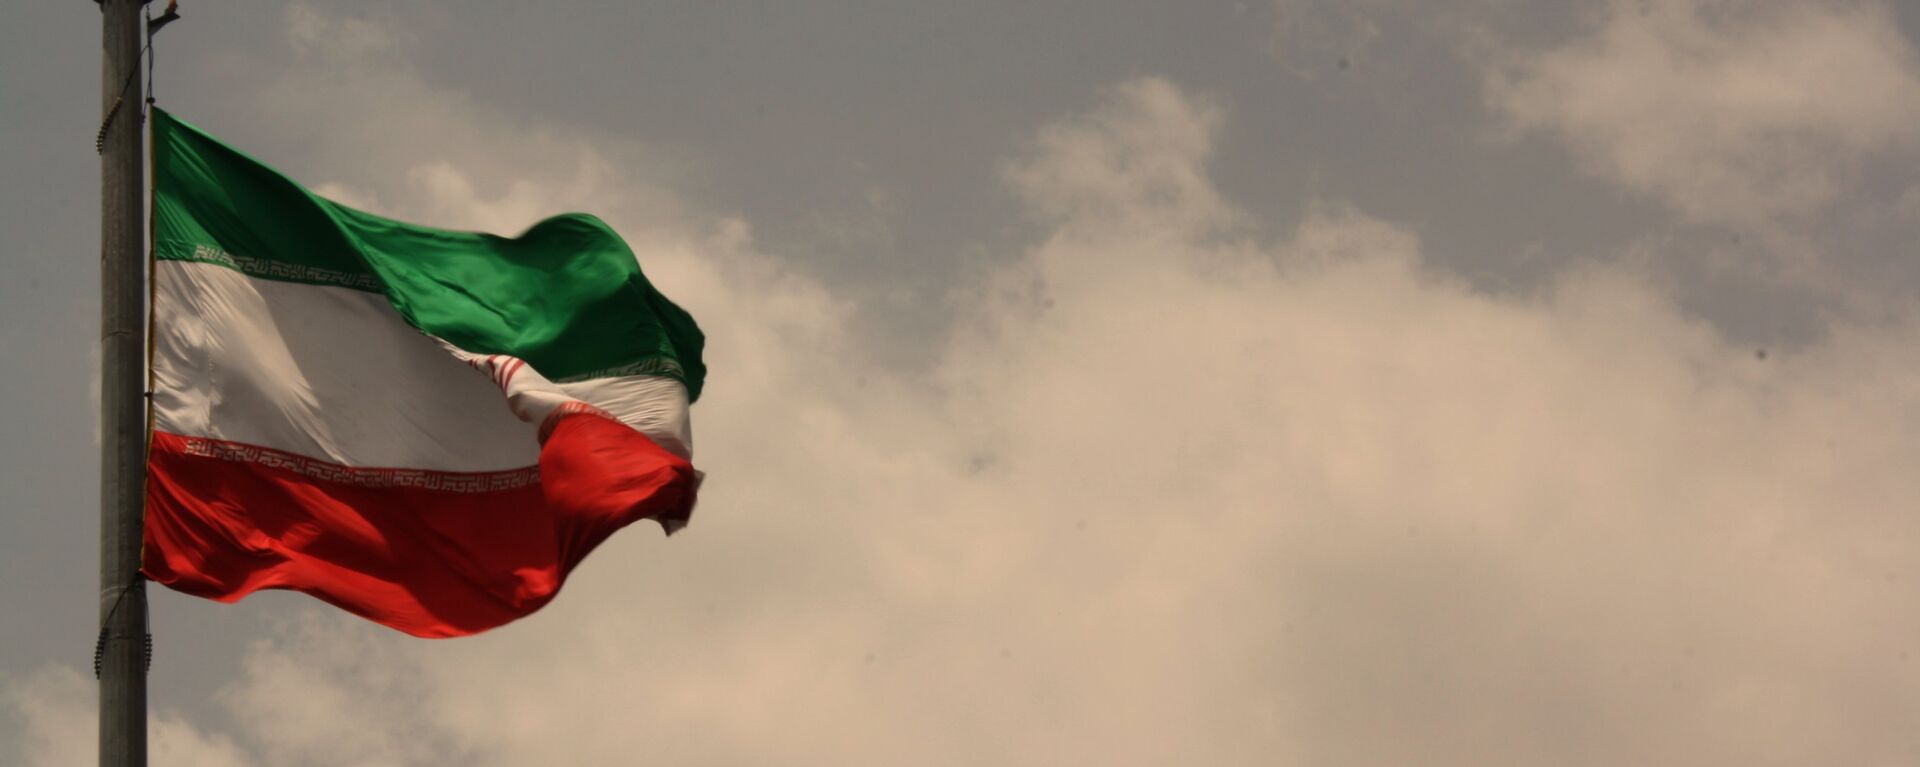 La bandera de Irán - Sputnik Mundo, 1920, 02.02.2021